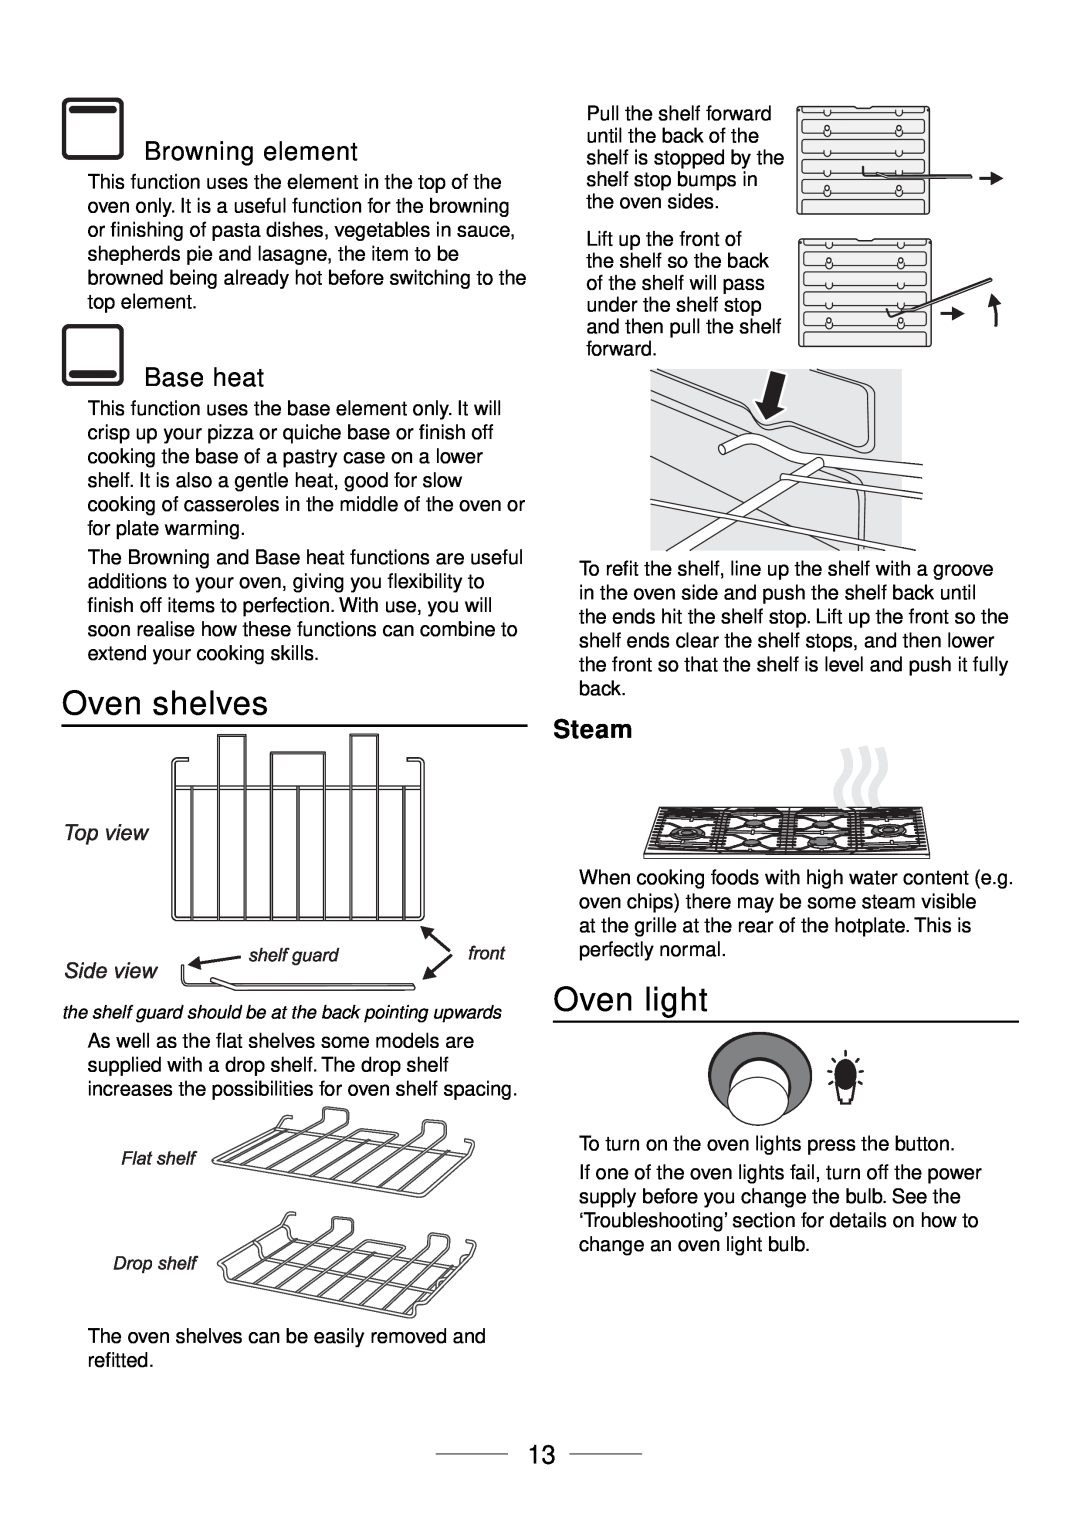 Maytag 110 installation instructions Oven shelves, Oven light, Steam 